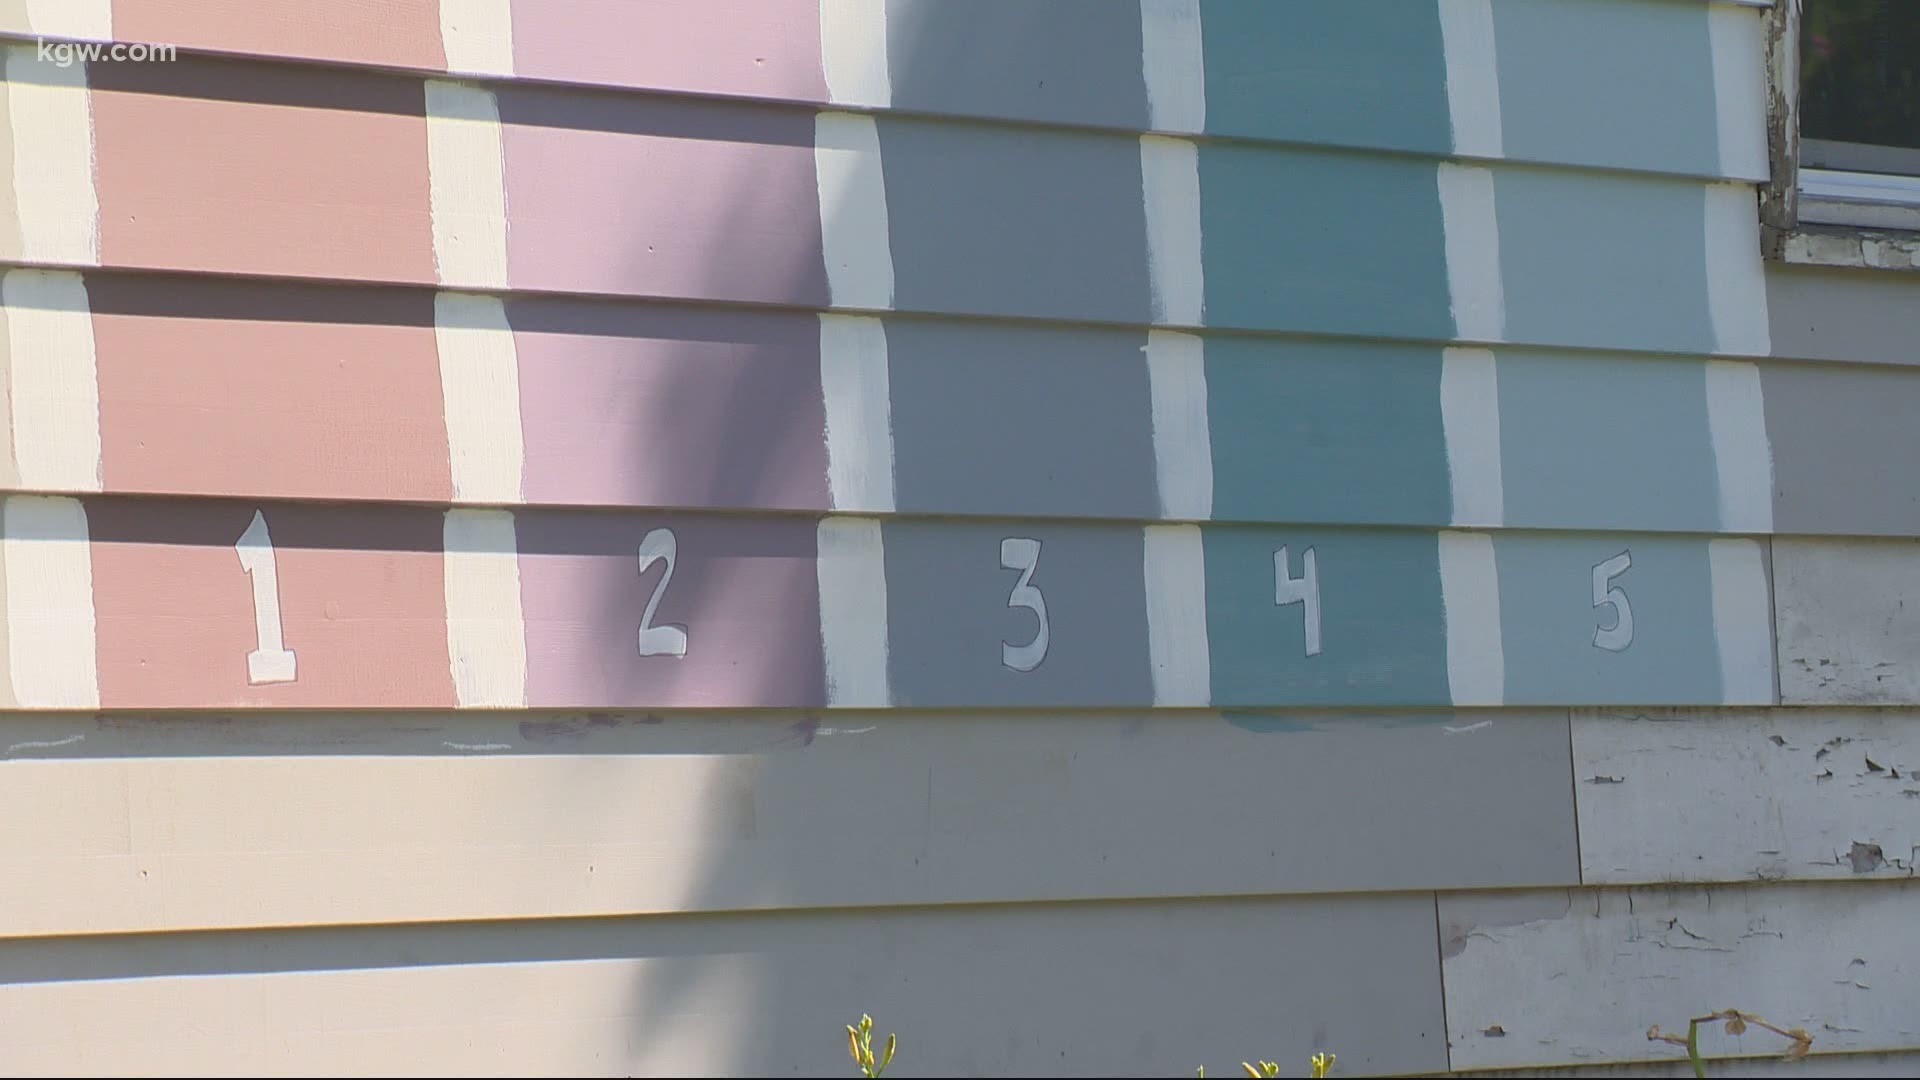 A survey about home paint colors has gone viral. Devon Haskins has the story.